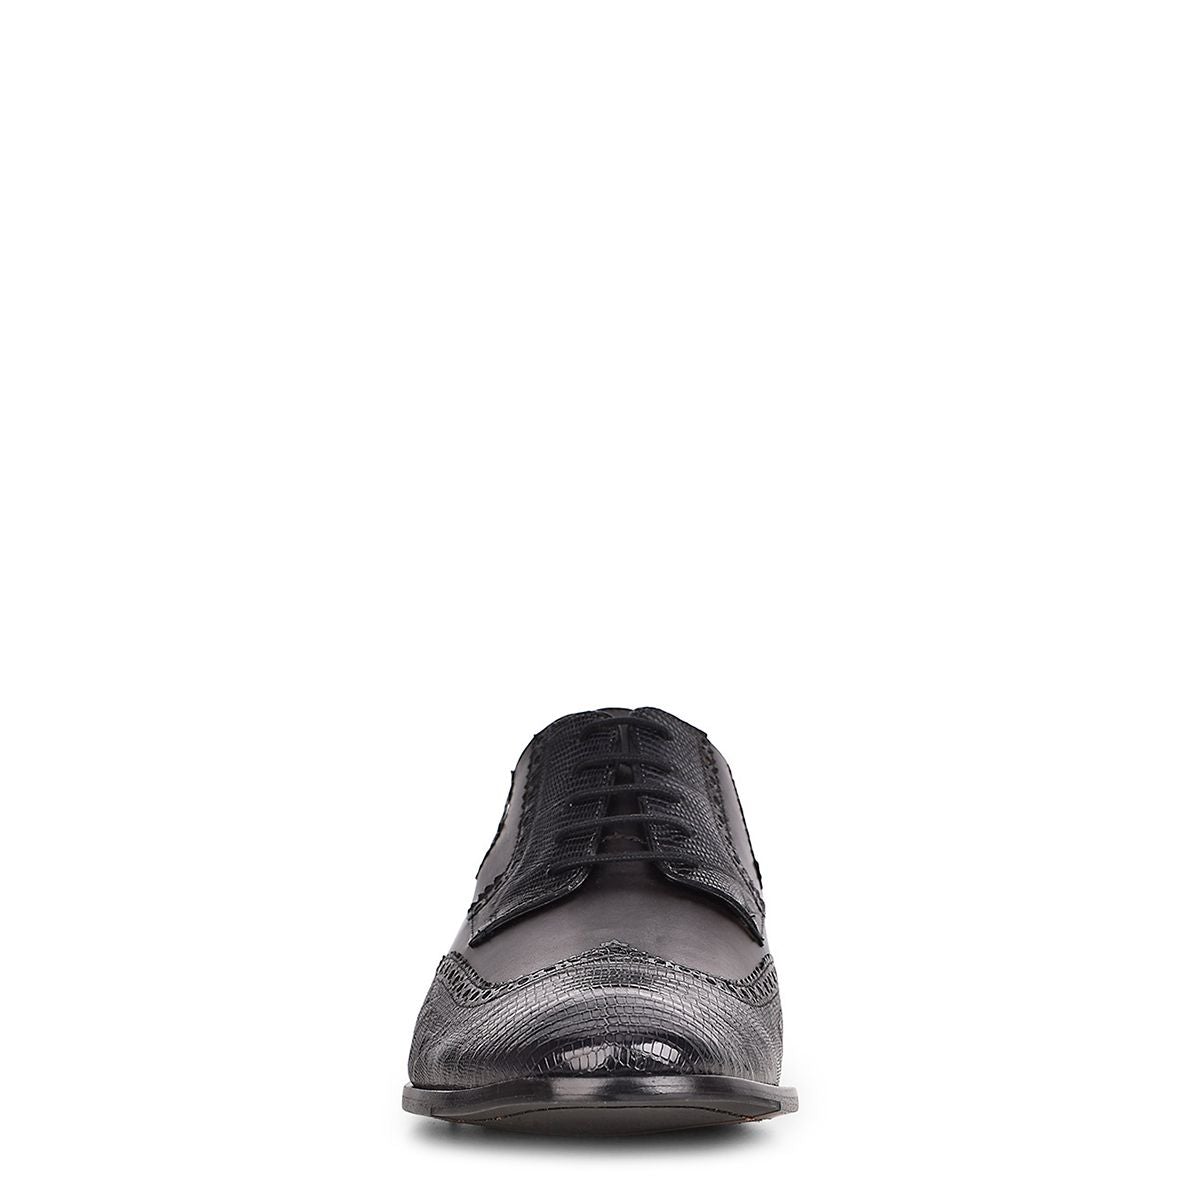 23NLTBV - Cuadra gray fashion dress lizard wing tip derby shoes for men-FRANCO CUADRA-Kuet-Cuadra-Boots